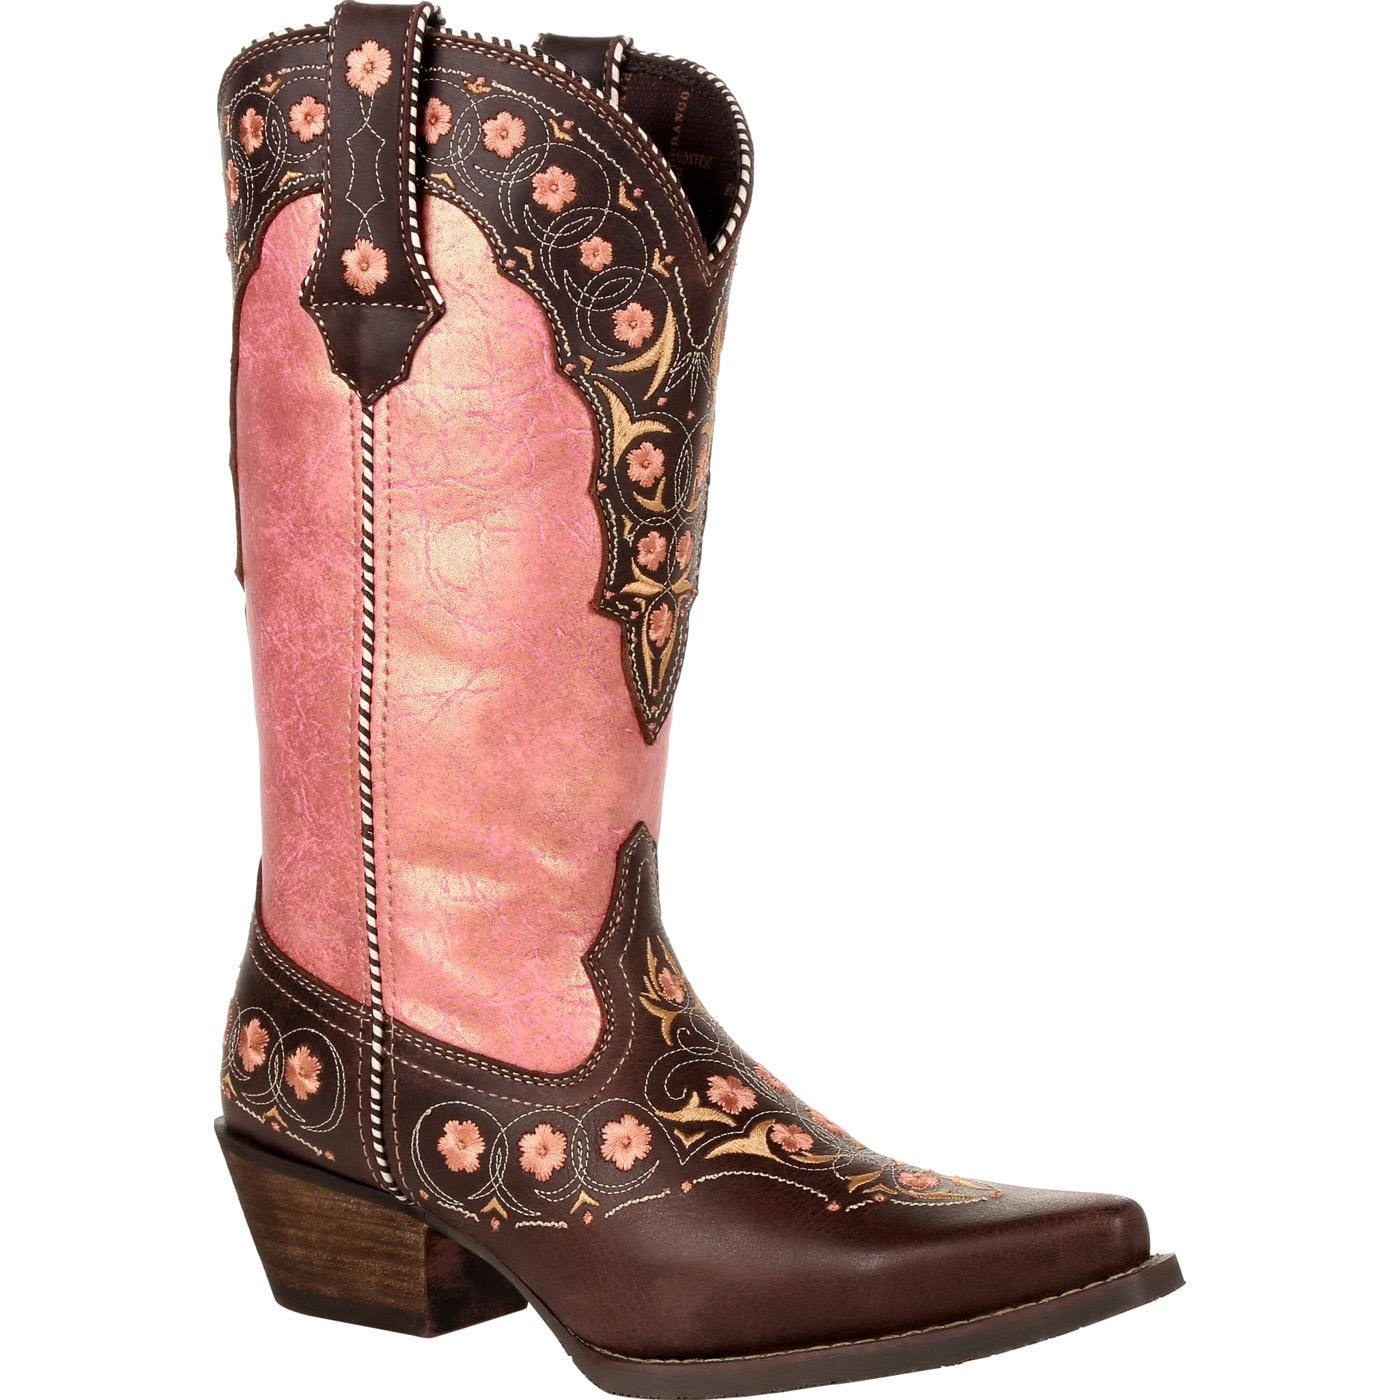 rose gold cowboy boots